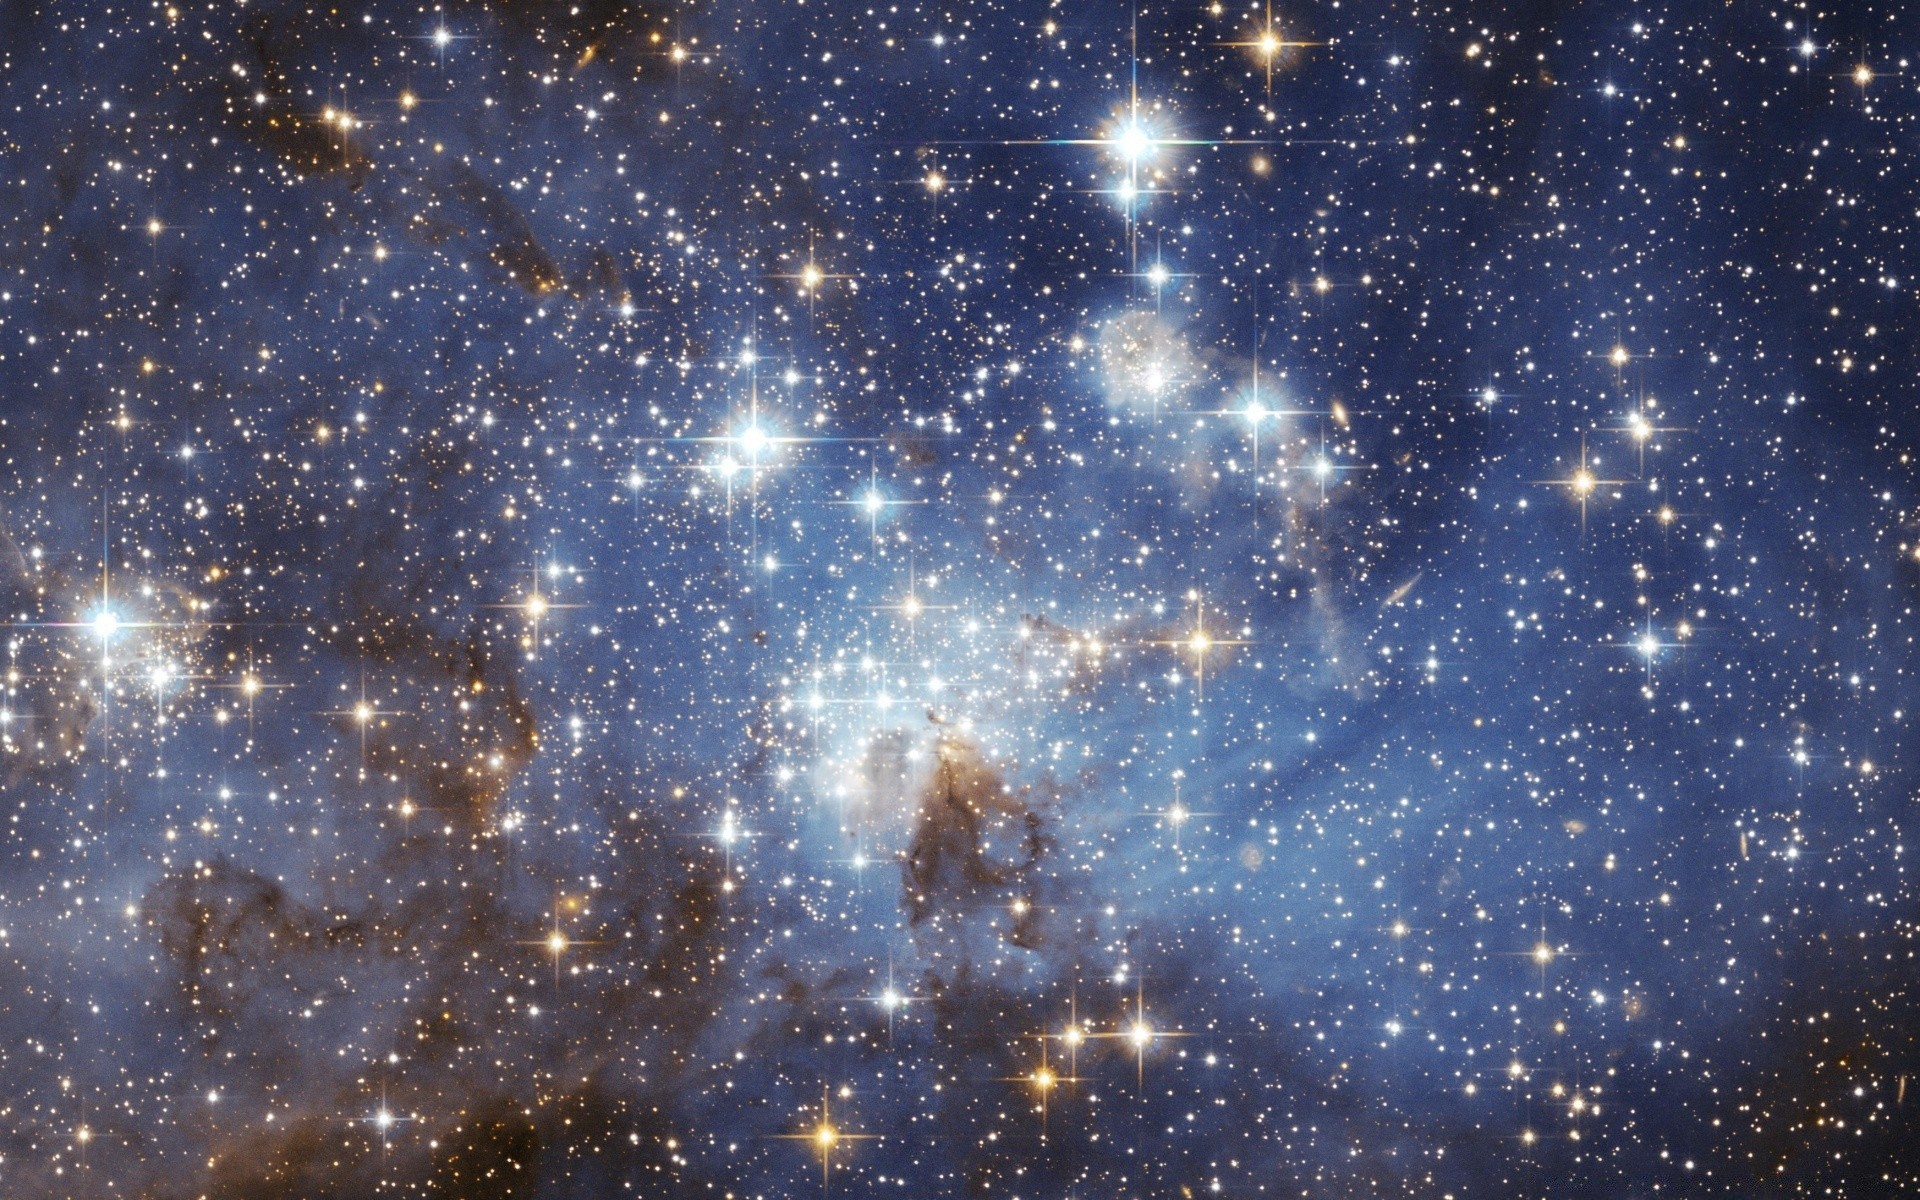 space astronomy constellation galaxy nebula dust christmas infinity shining exploration astrology stellar desktop illustration cosmos bright glisten dark moon abstract